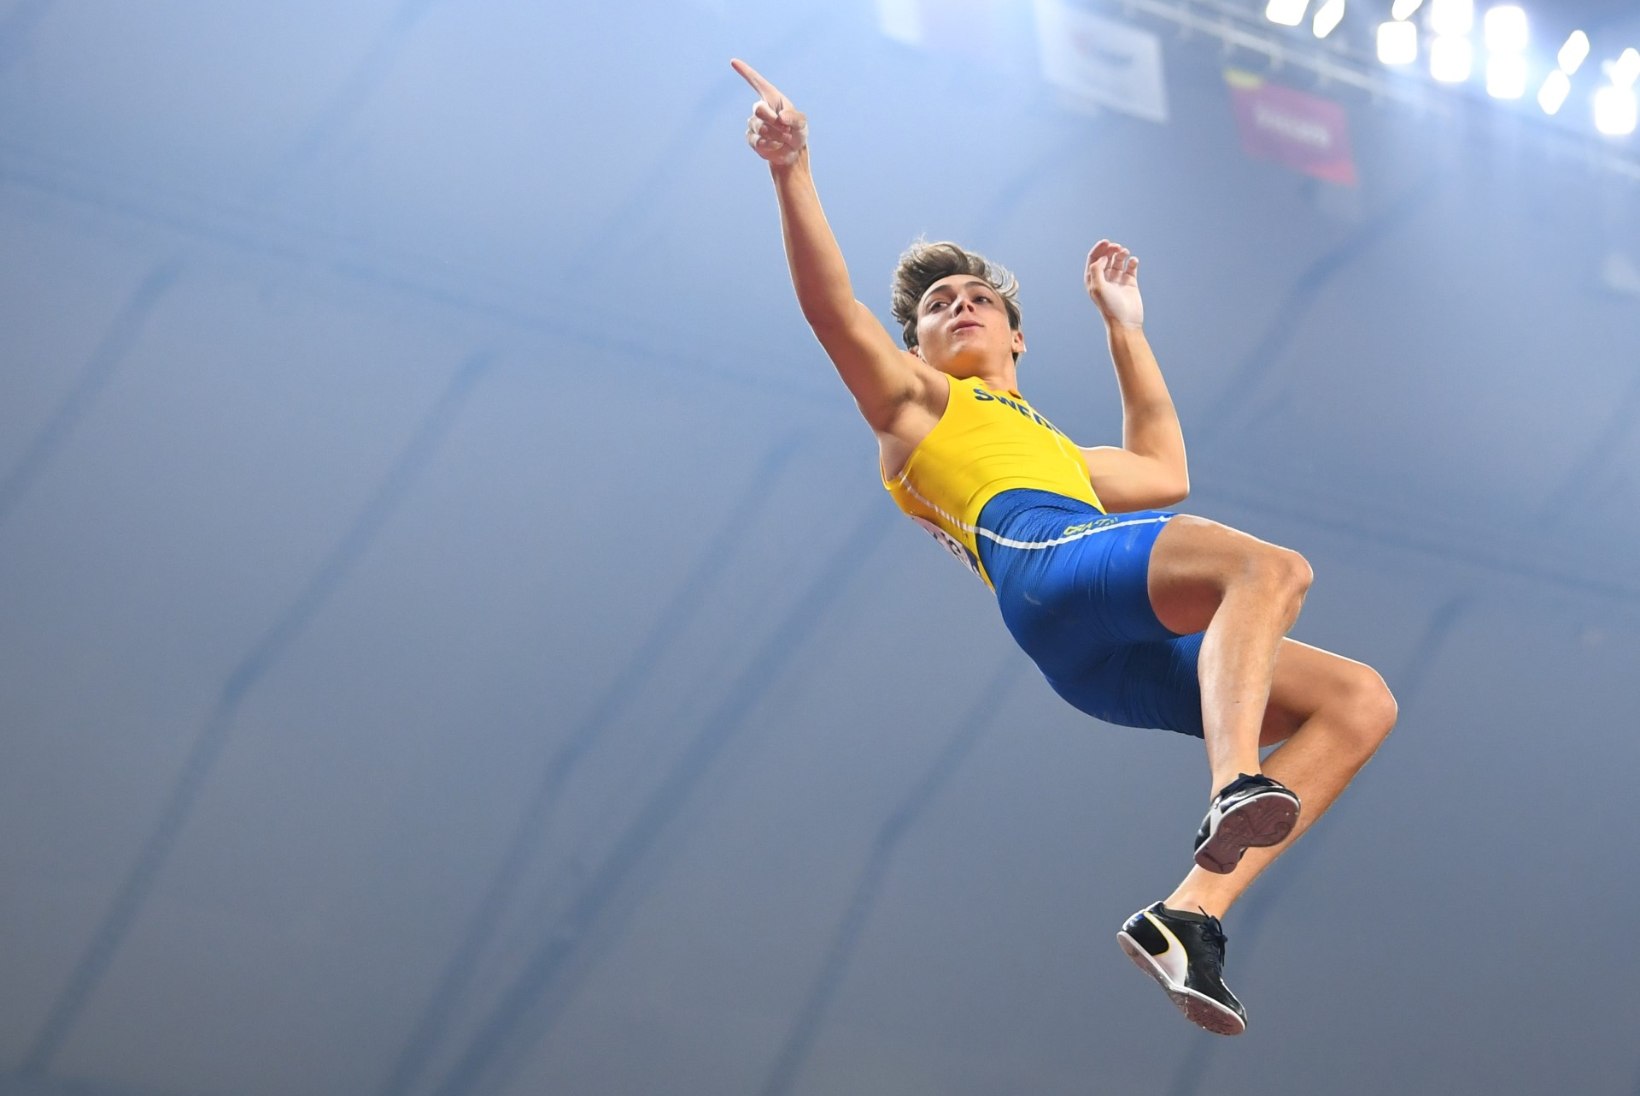 VIDEO | Rootsi teivashüppetäht püstitas maailmarekordi!